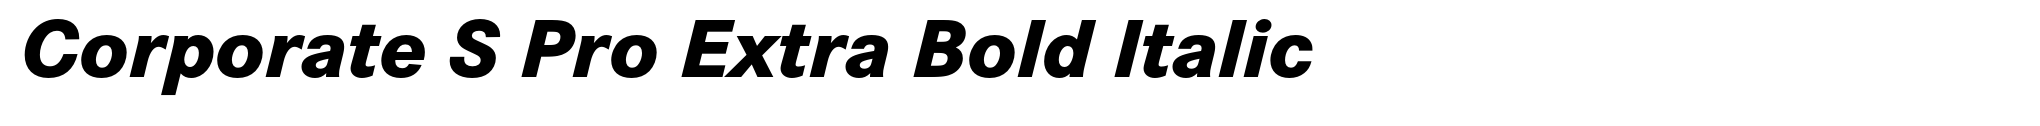 Corporate S Pro Extra Bold Italic image